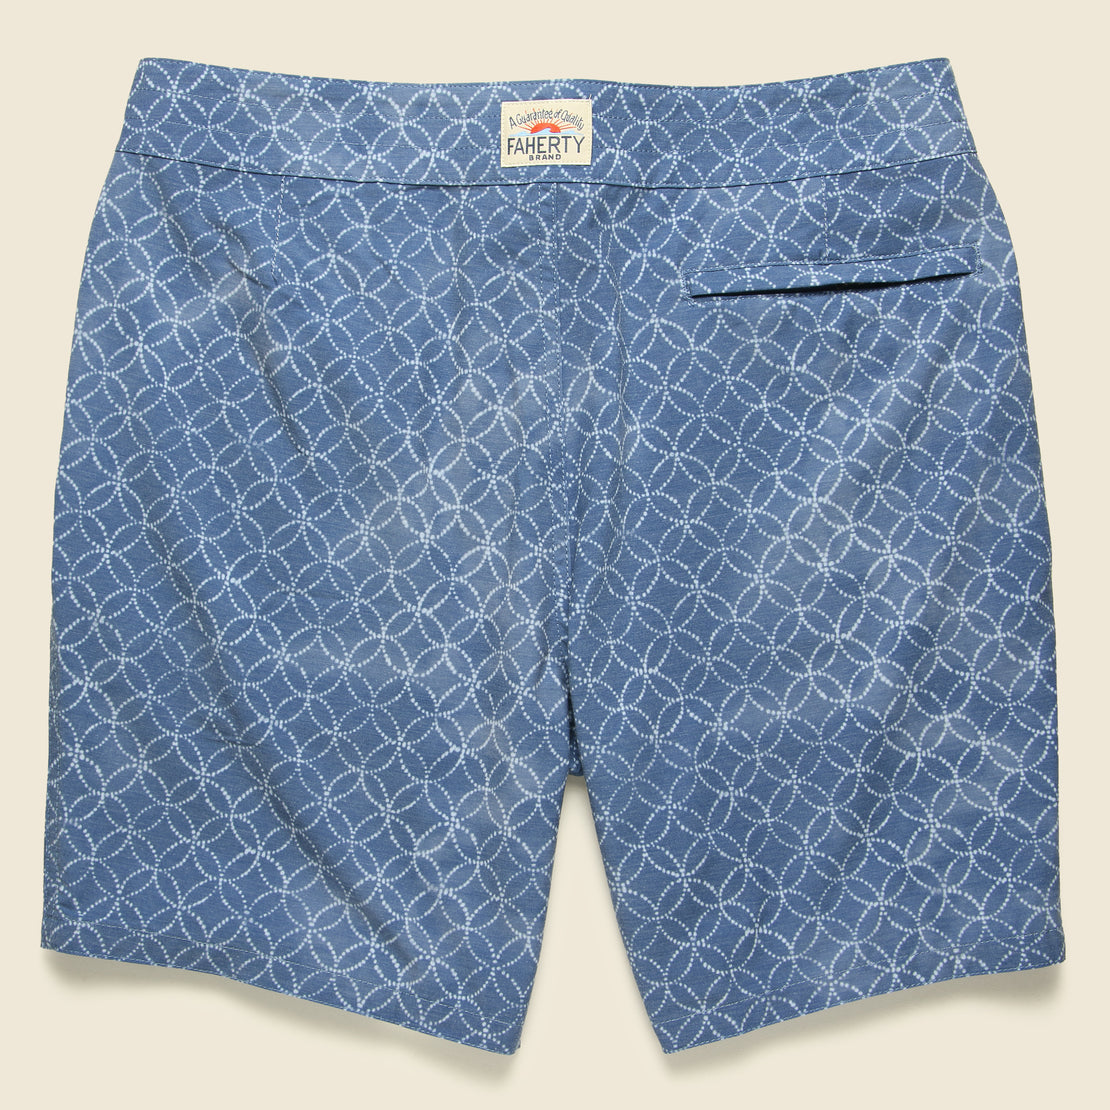 Classic 7-inch Boardshort - Moonlight Batik - Faherty - STAG Provisions - Shorts - Swim